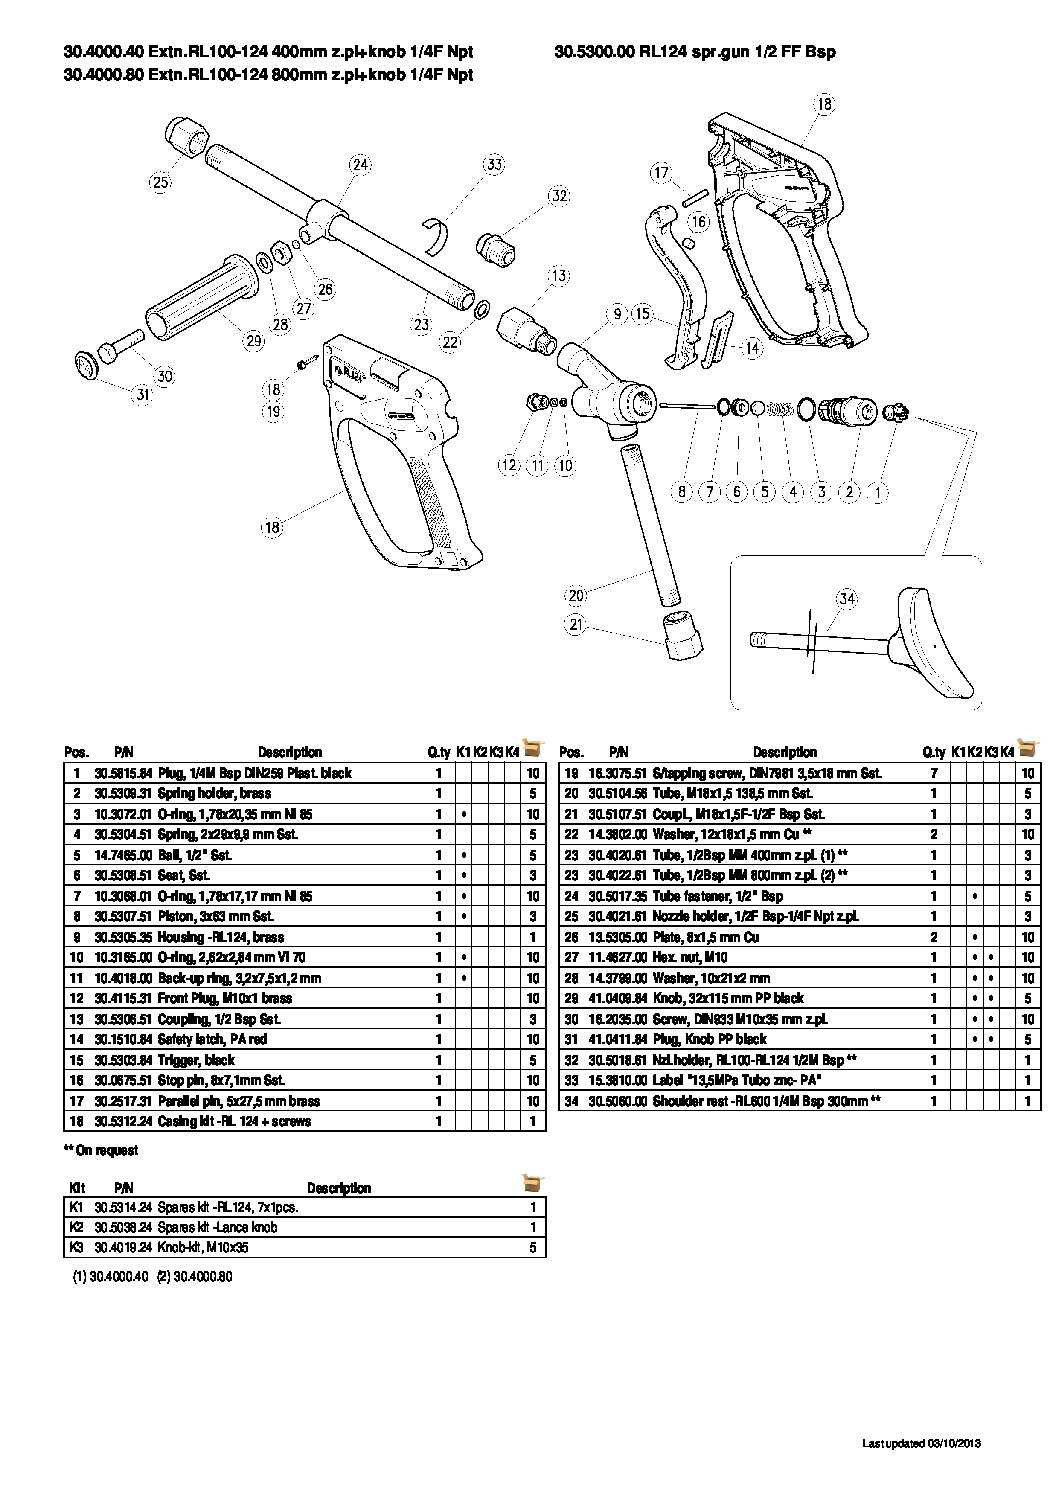 PA RL100/RL124 Extension parts breakdown